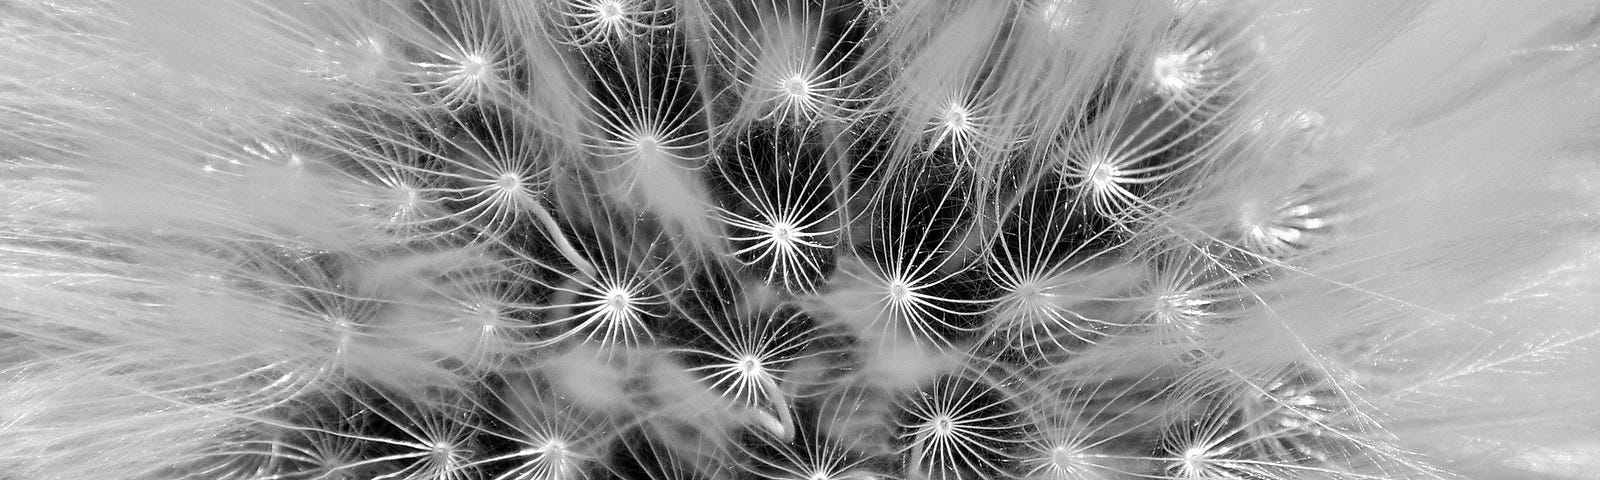 Dandelion seeds monochrome